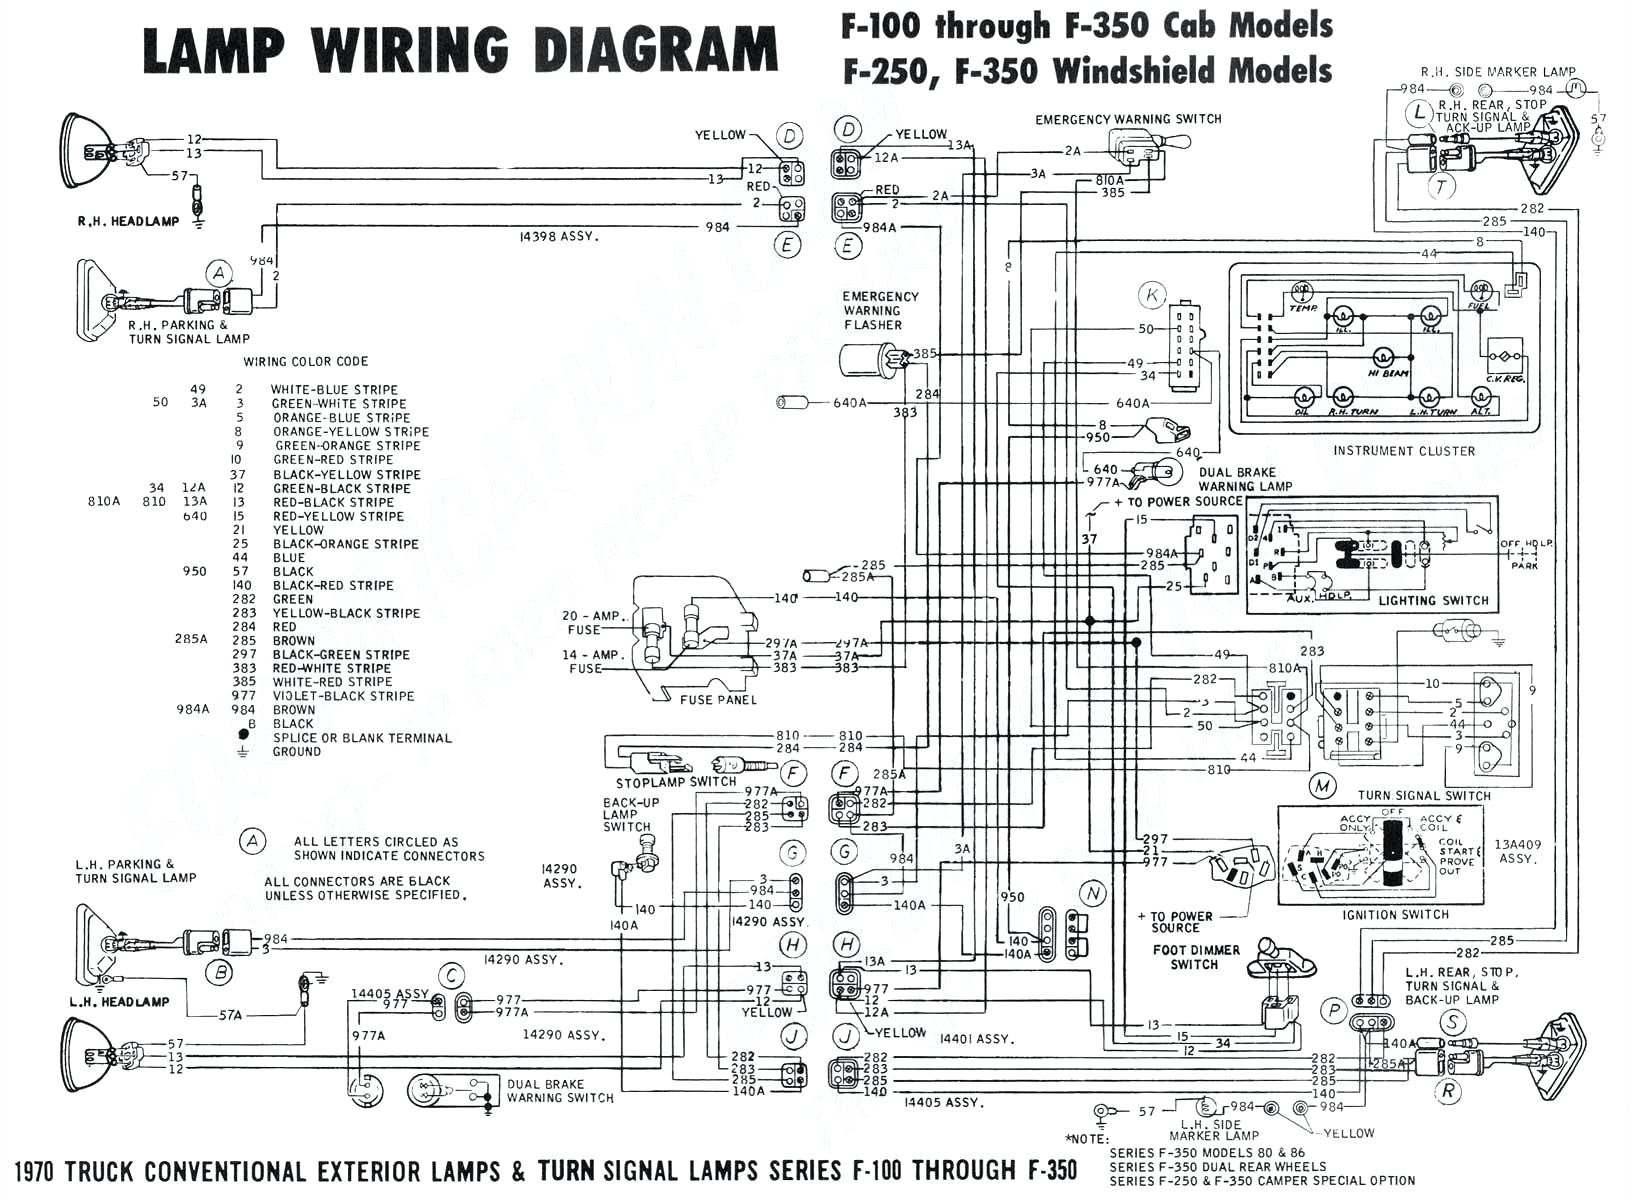 Power Acoustik Pd 710 Wiring Diagram Power Acoustik Pd 710 Wiring Diagram New Power Acoustik Wiring